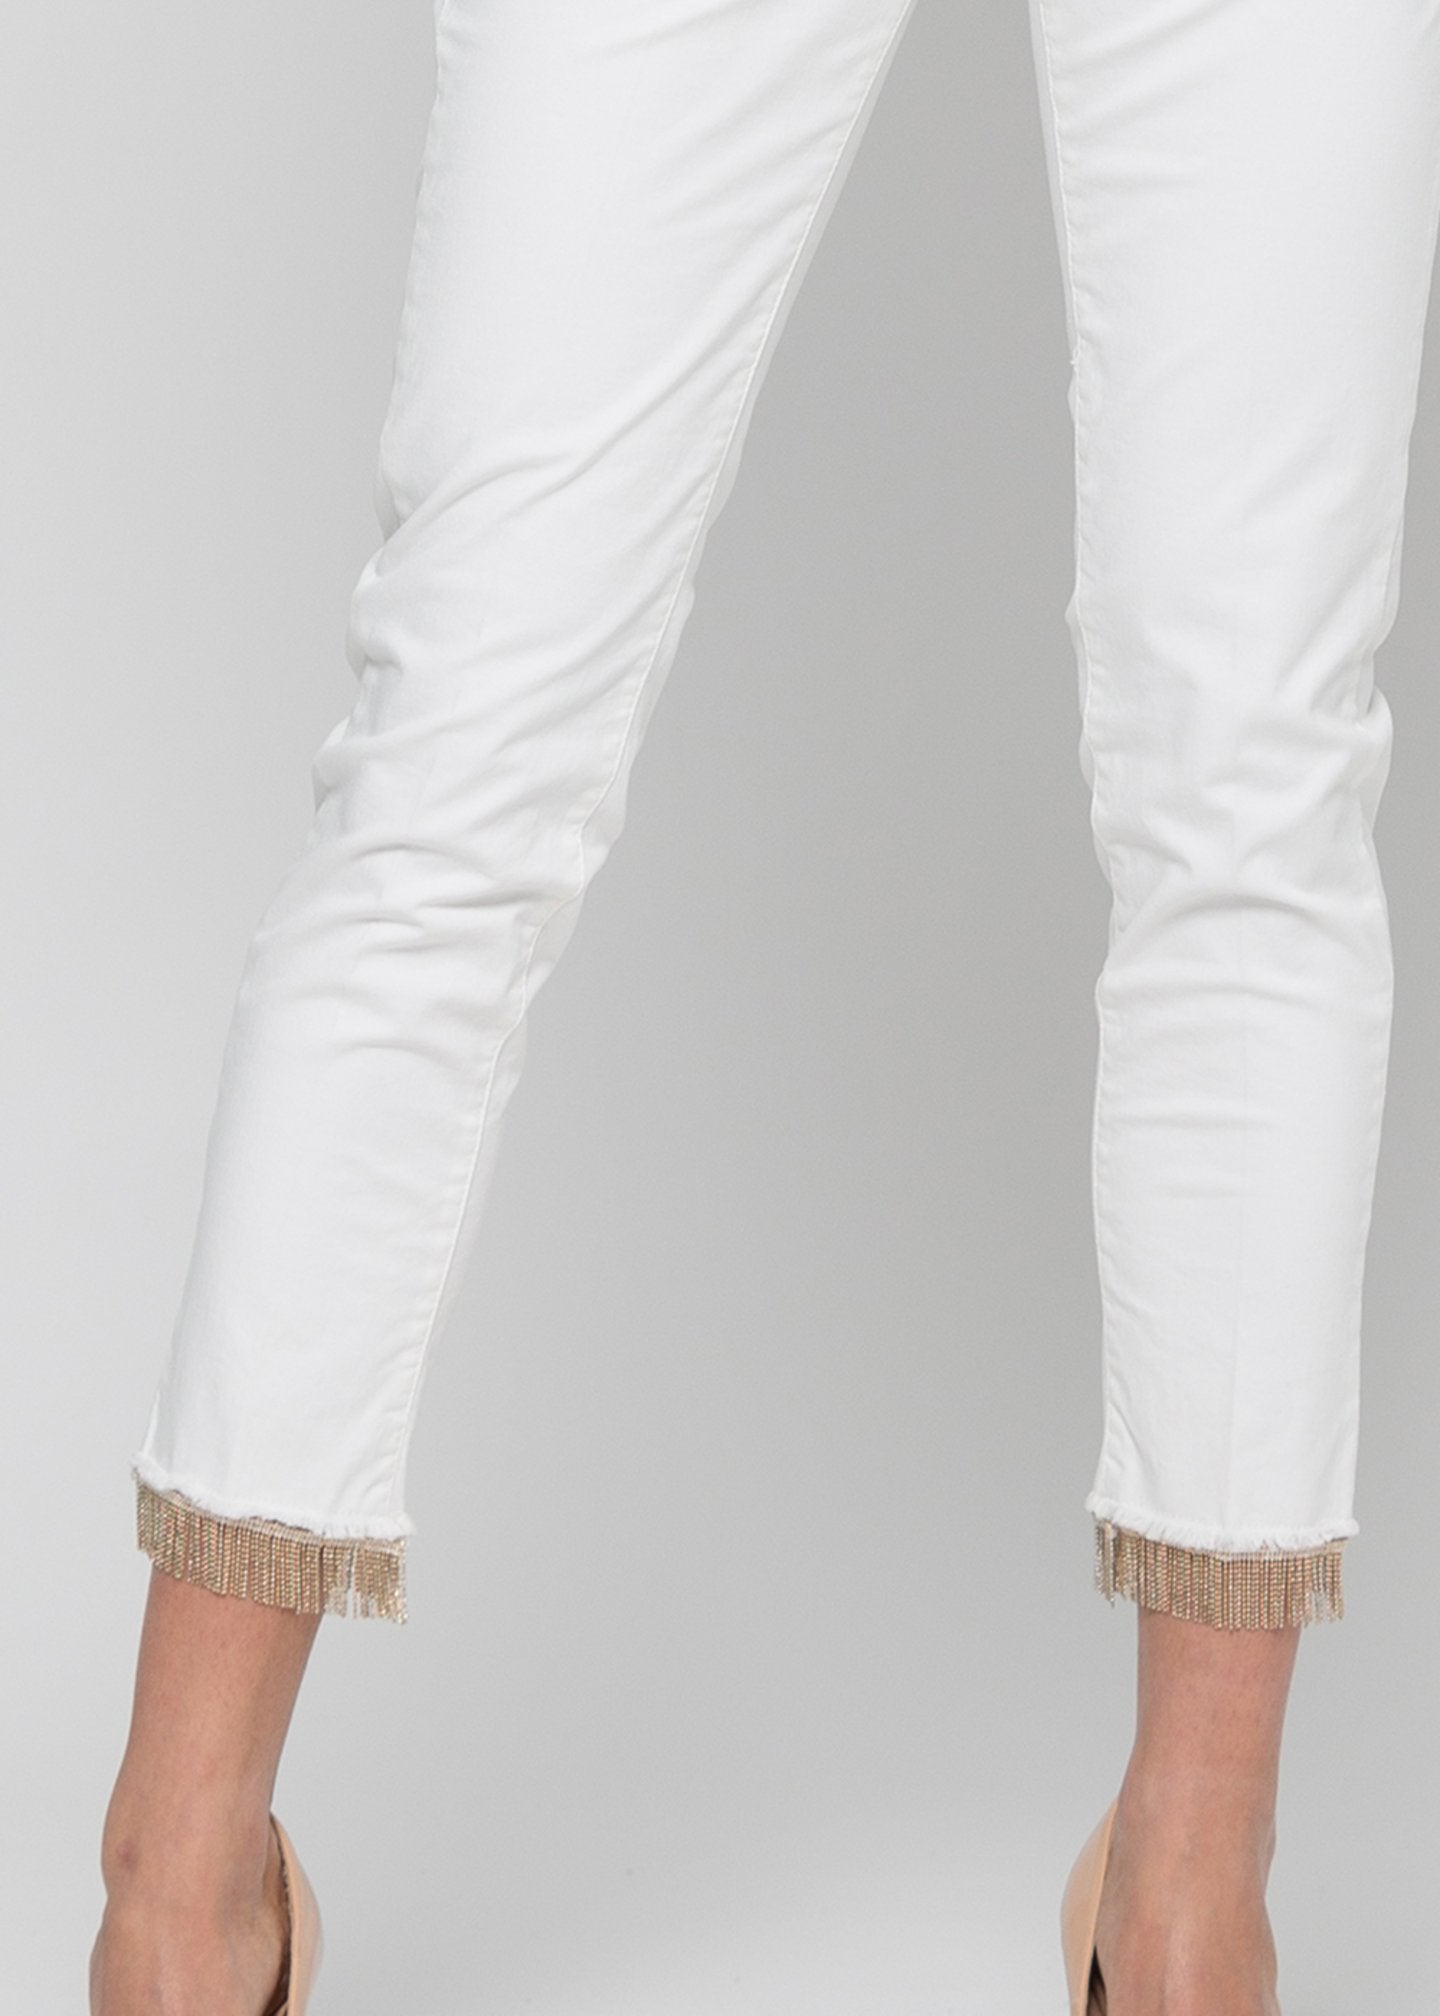 Pantalone color slim leg cropped / Bianco - Ideal Moda